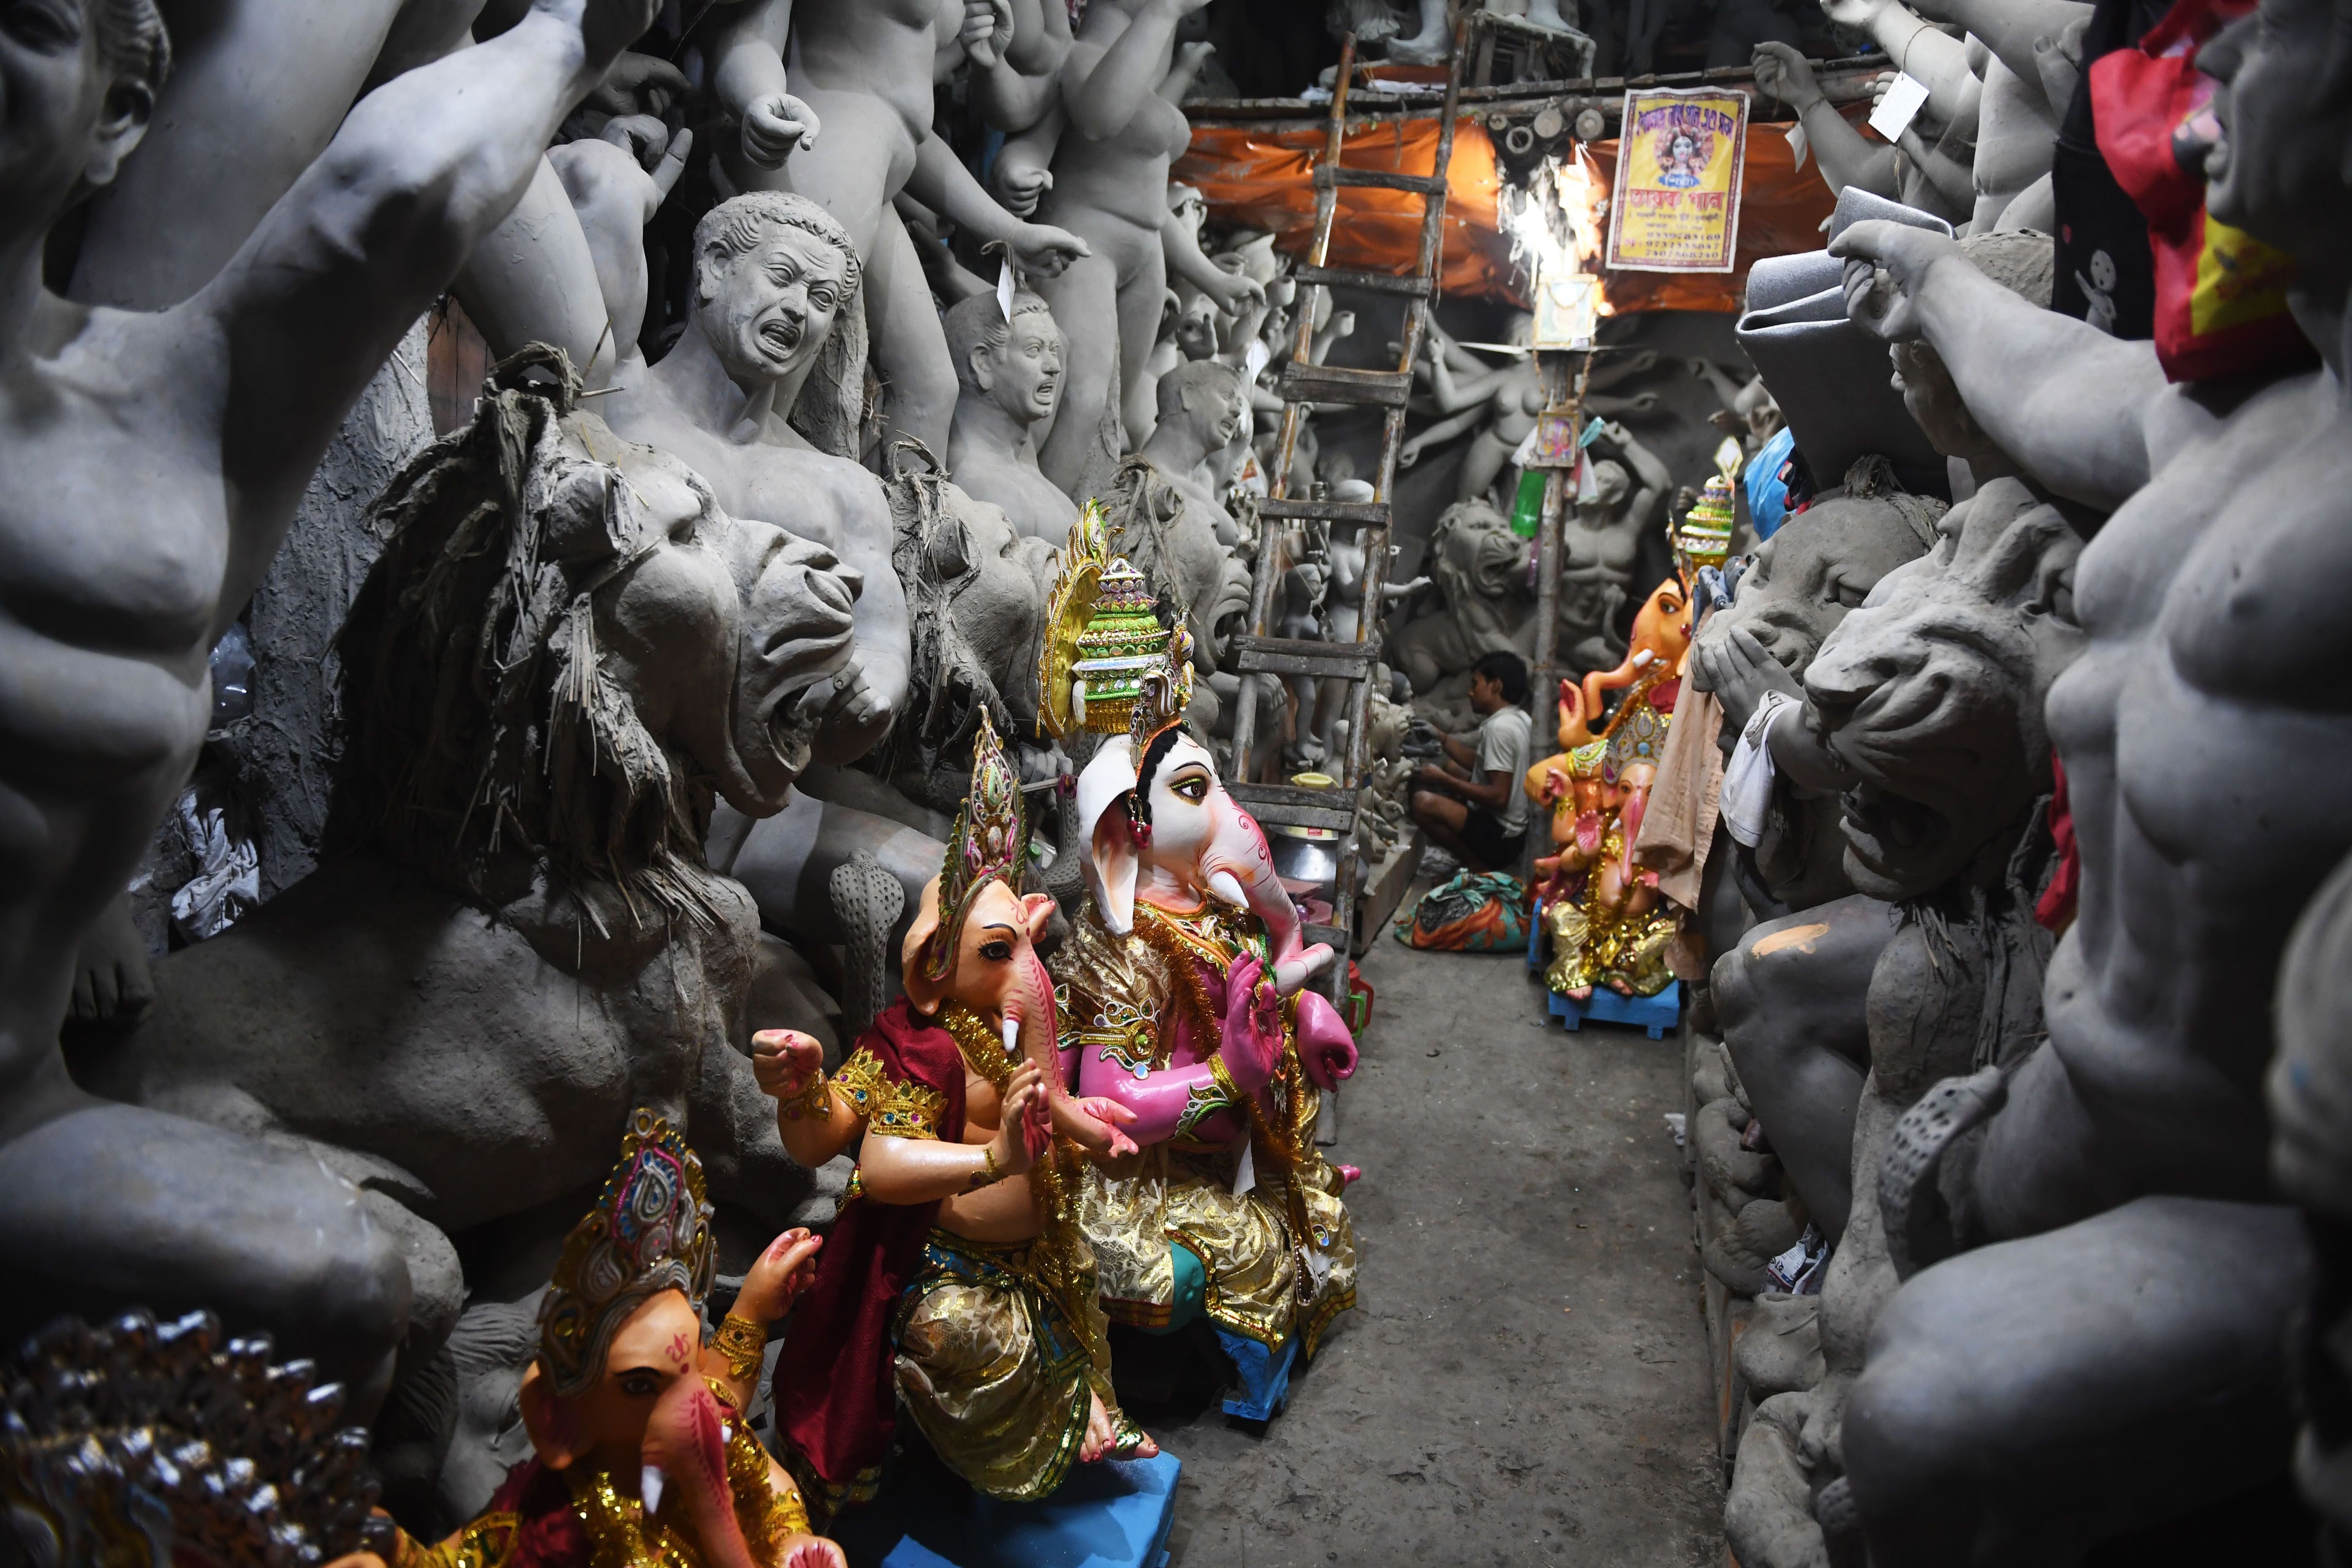 Representative: An artisan works on an idol of Hindu deity inside a workshop in India